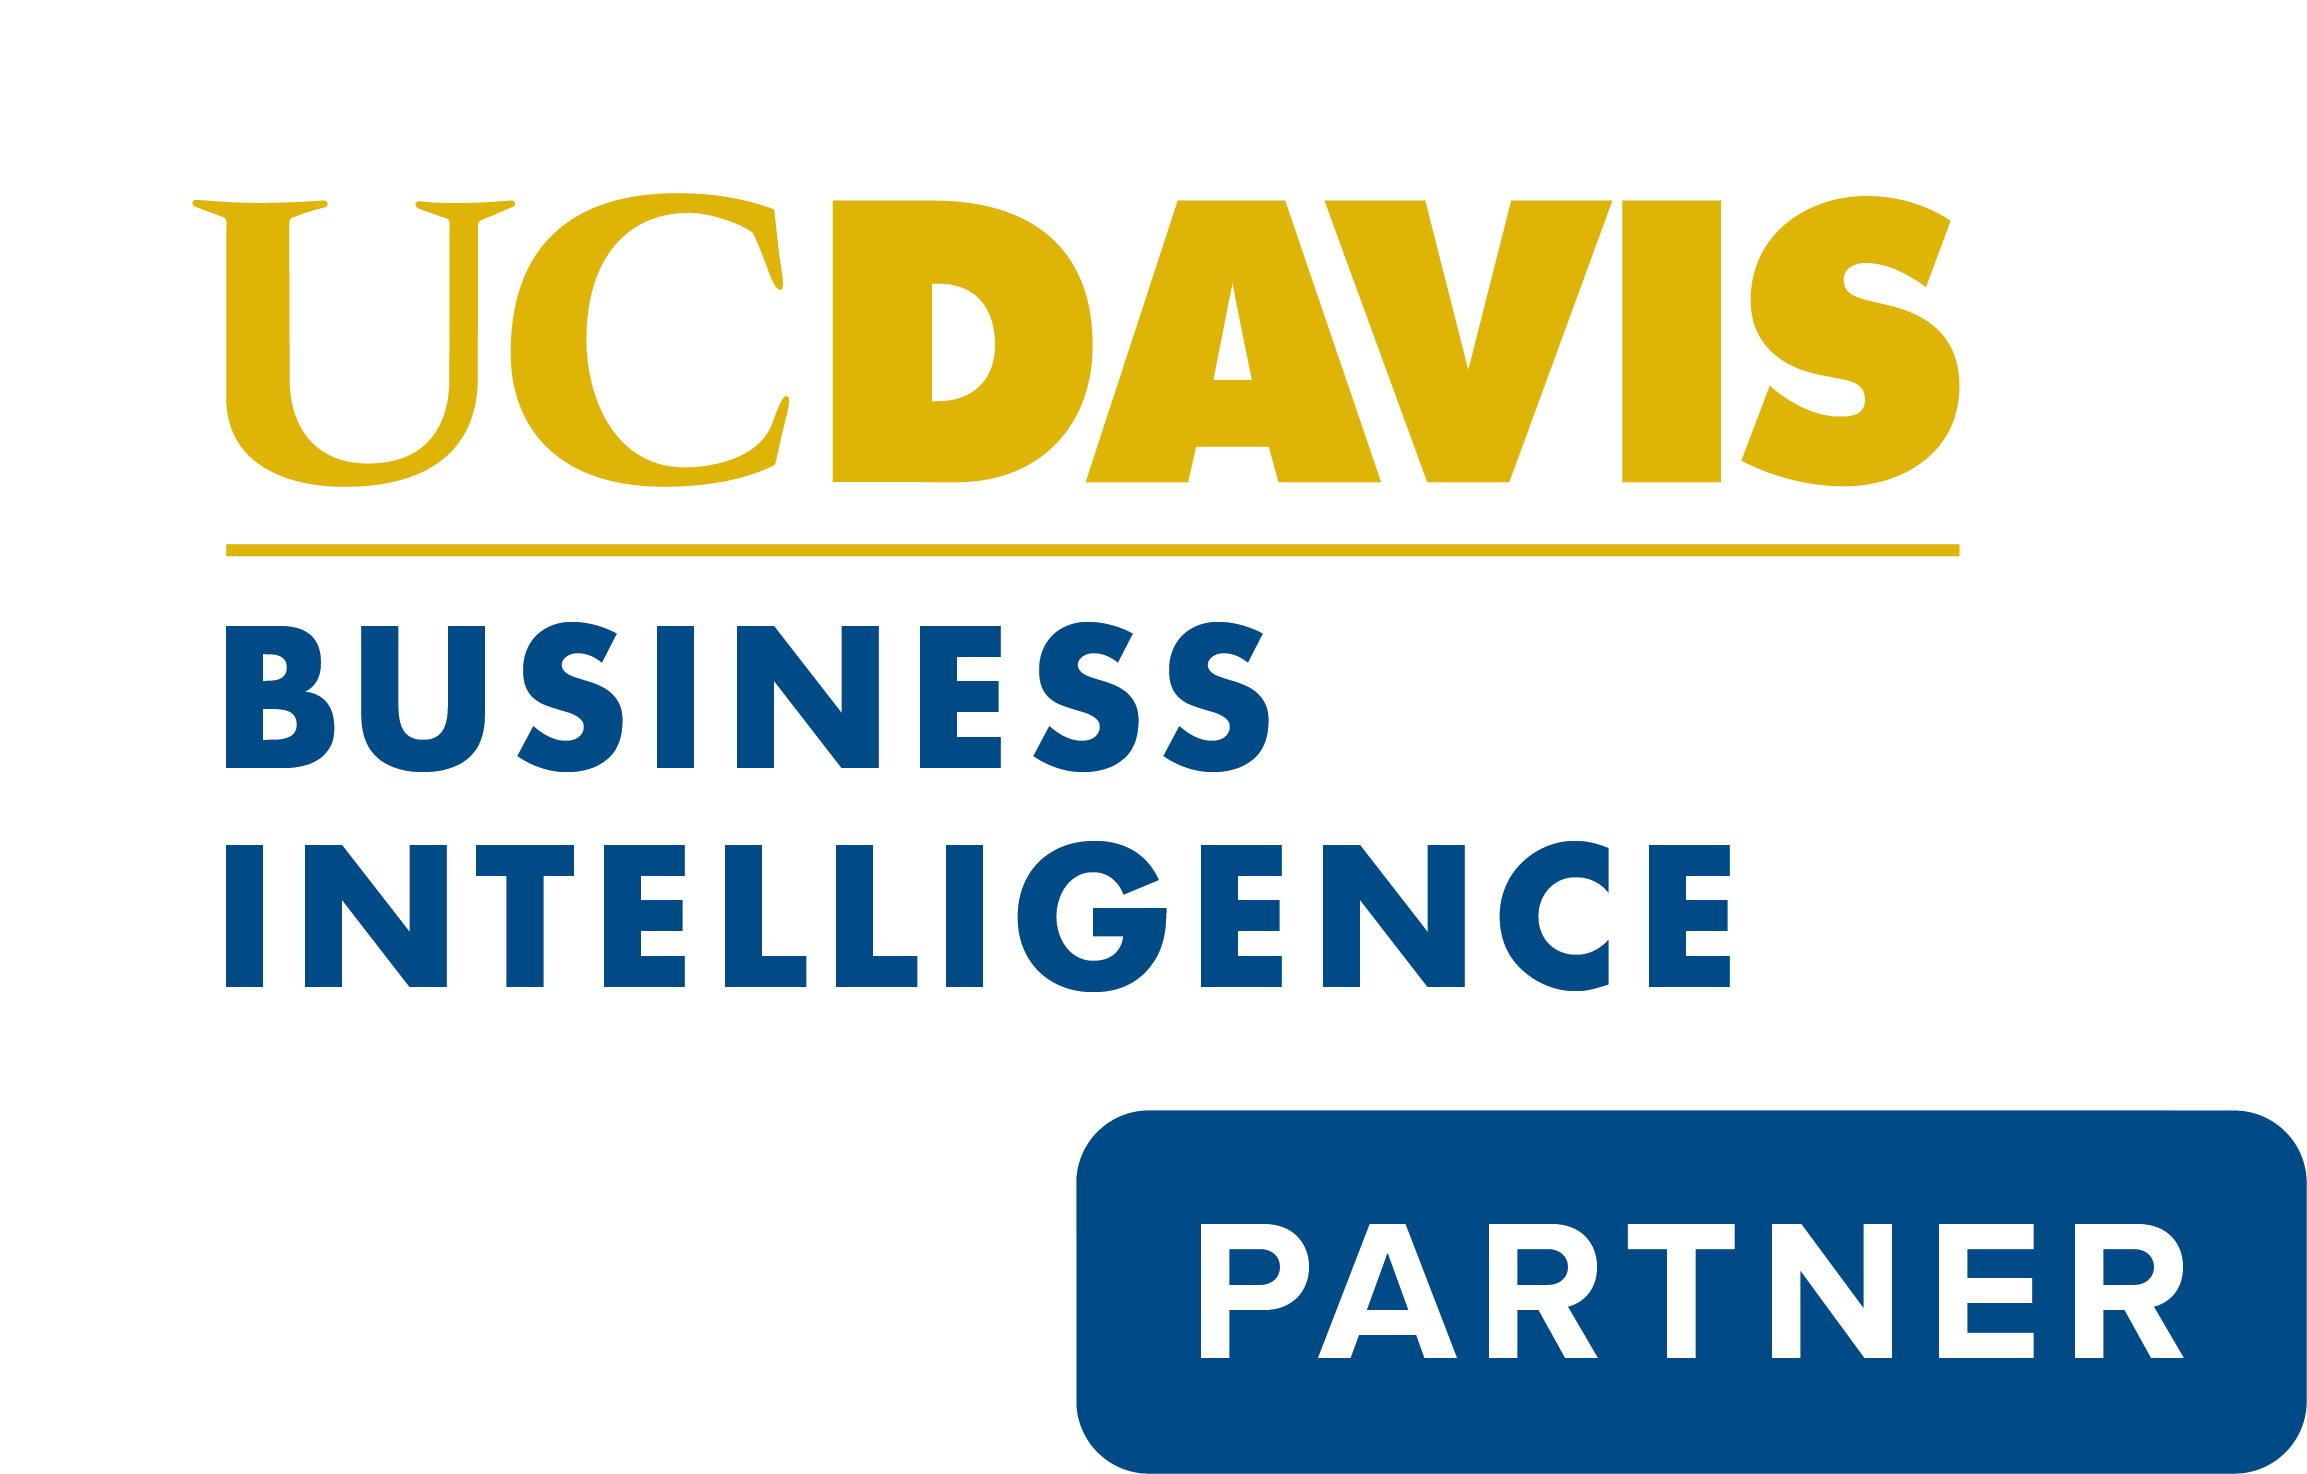 business intelligence partner logo